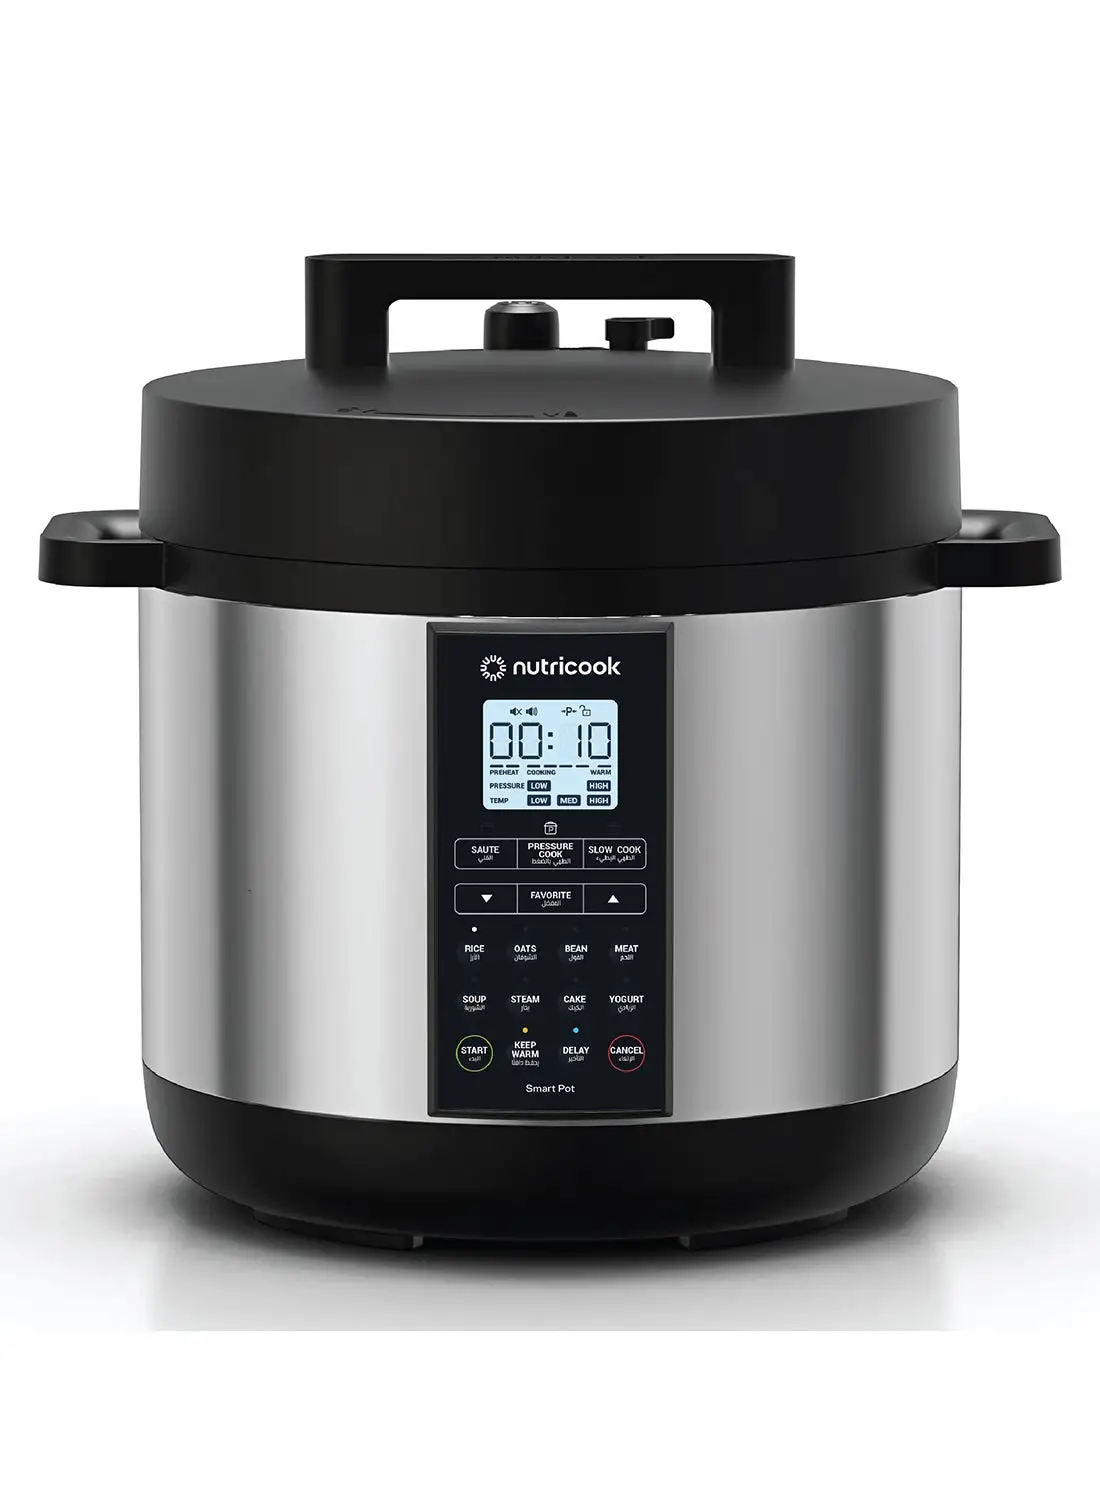 nutricook Aluminium Smart Pot 2 Prime 9 Appliances In 1 Pressure Cooker/Sauté Pot/Slow Cooker/Rice Cooker/Cake Maker/Steamer/Yogurt Maker And Food Warmer 8 L 1200 W SP208P Silver